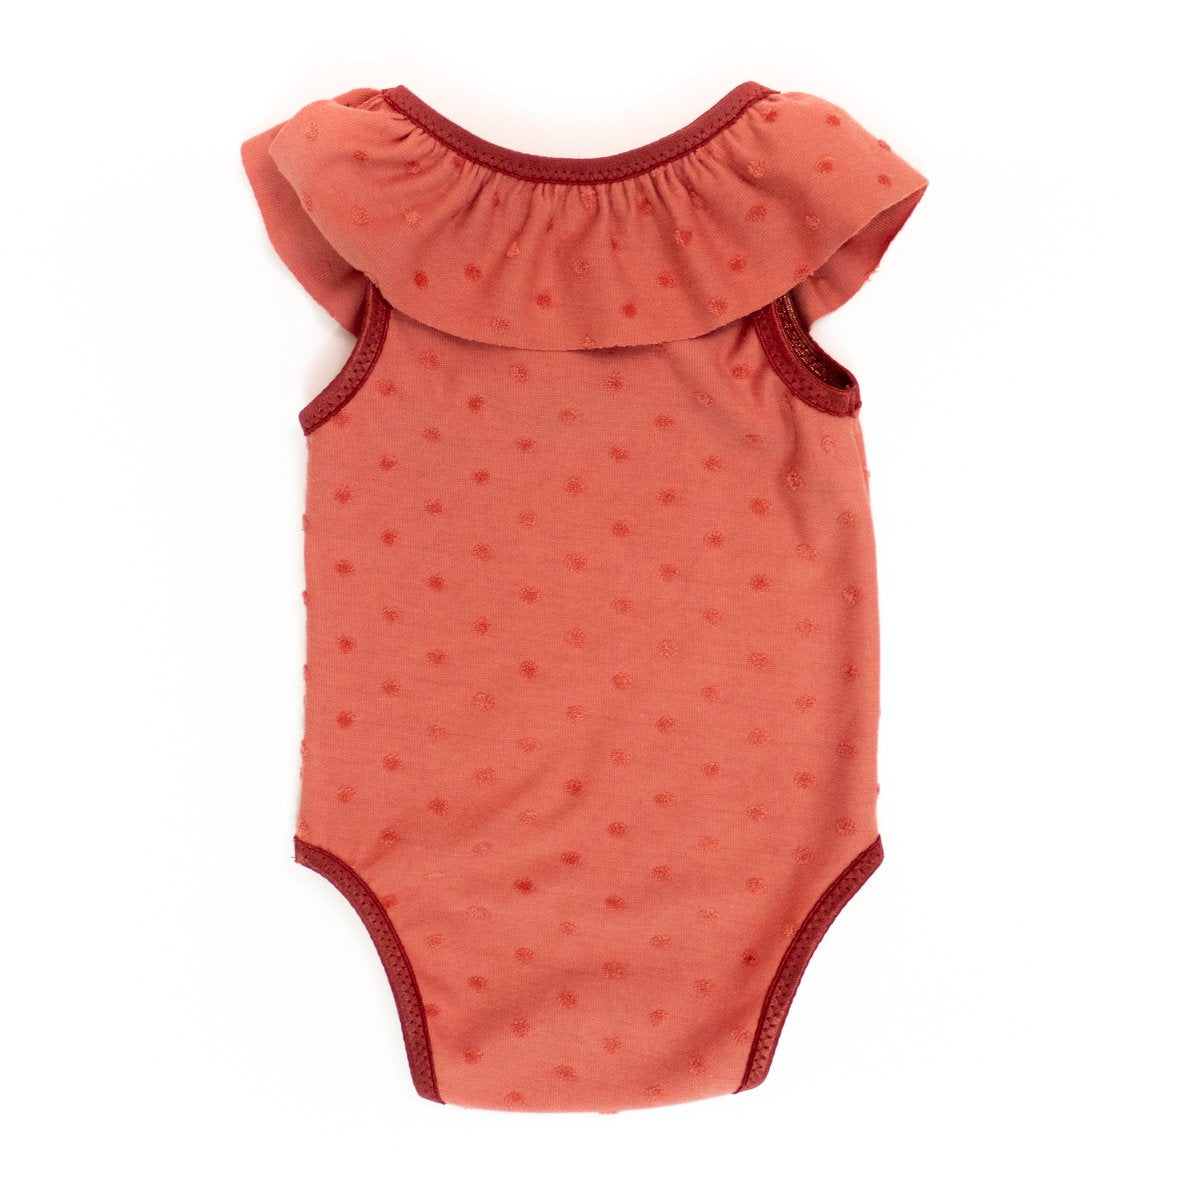 Ikatee - MALAGA Bodysuit - Baby 1M/4Y - Paper Sewing Pattern